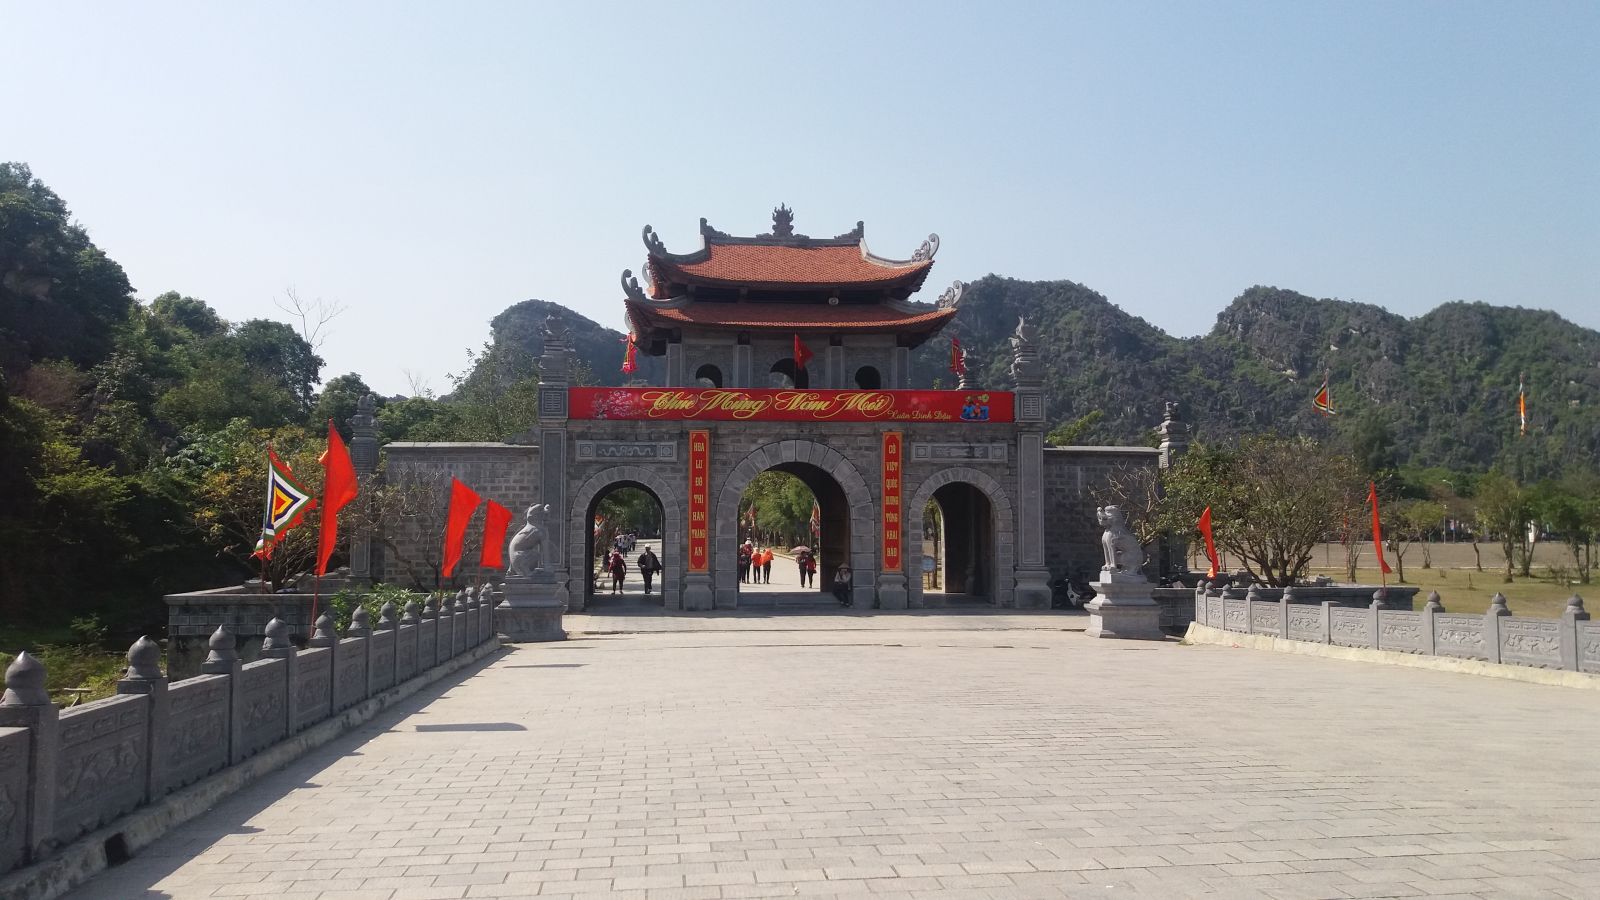 The gate to enter Hoa Lu ancient capital